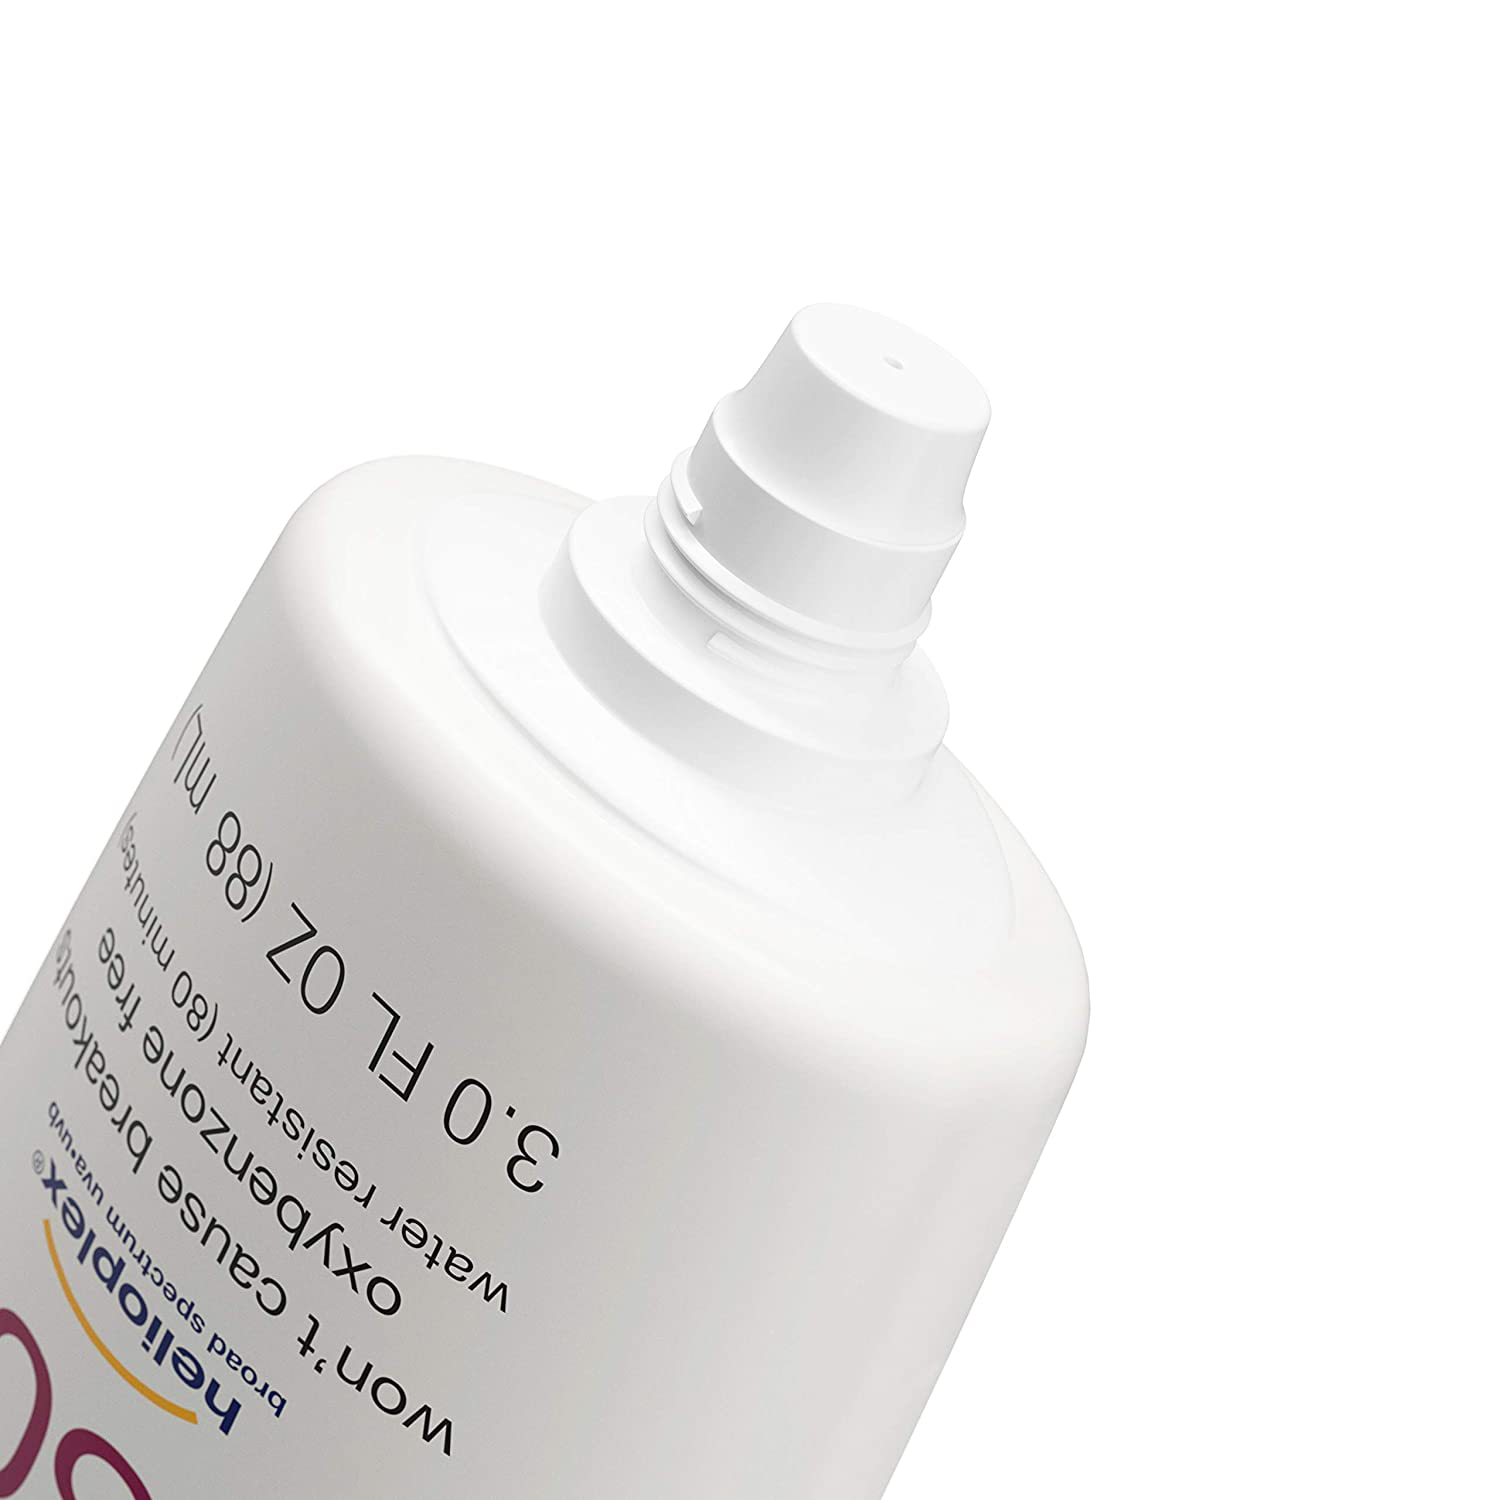 Neutrogena Clear Face Liquid Sunscreen for Acne-Prone Skin, Broad Spectrum SPF 30 Sunscreen Lotion with Helioplex, Oxybenzone-Free, Oil-Free, Fragrance-Free; Non-Comedogenic, 3 fl. oz